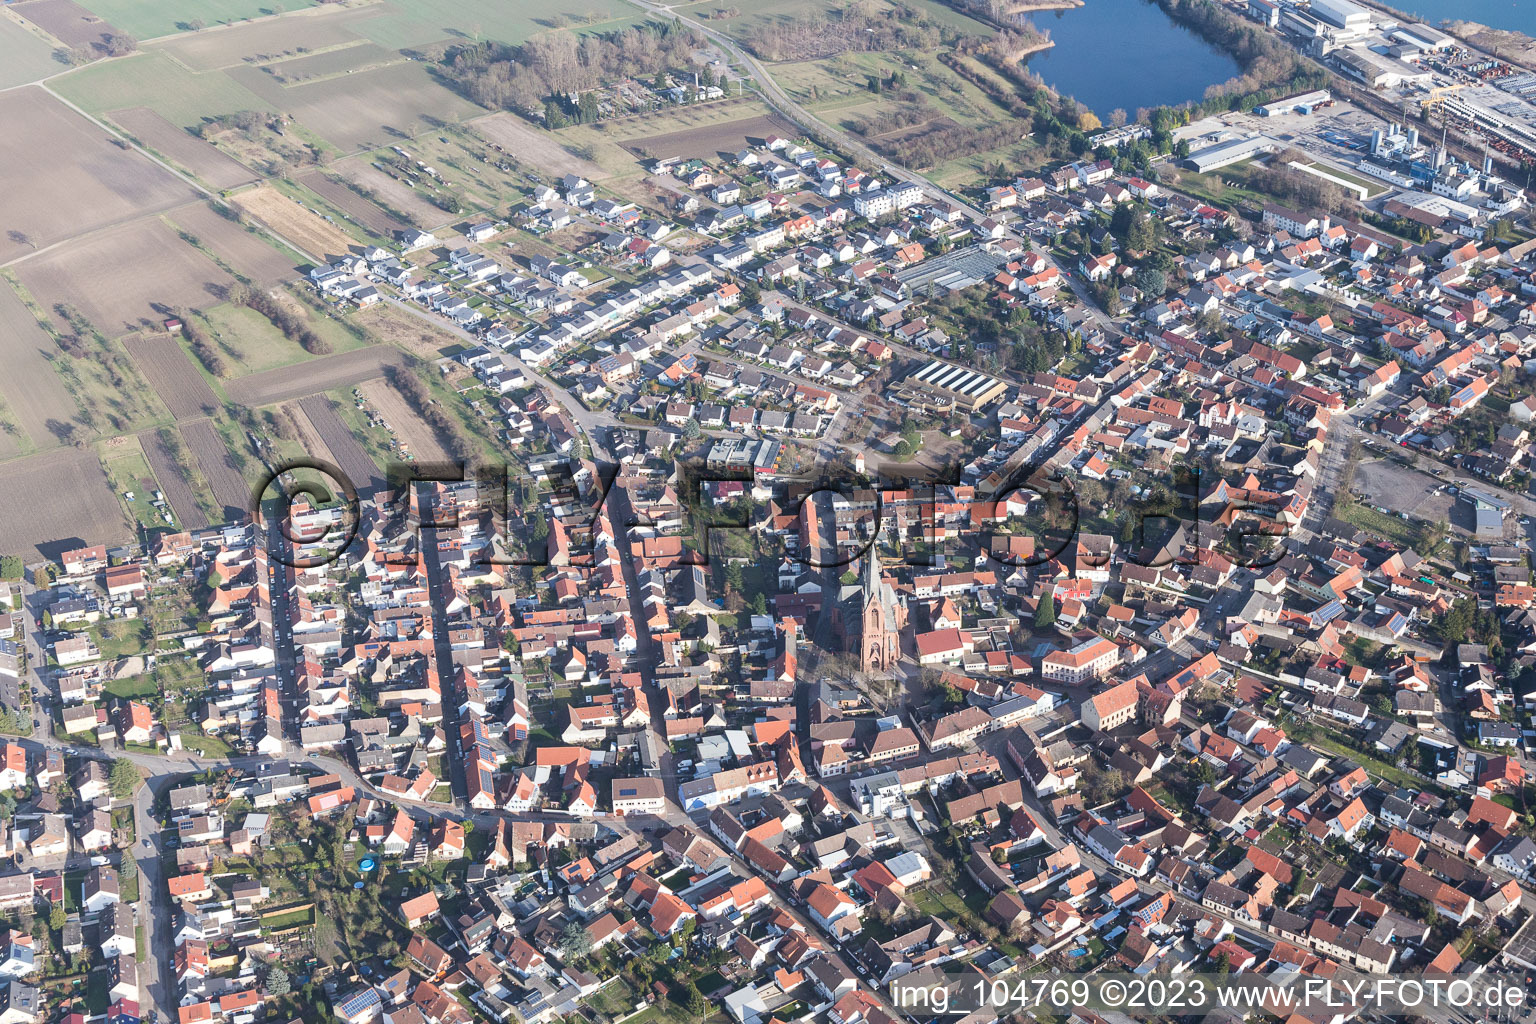 District Rheinsheim in Philippsburg in the state Baden-Wuerttemberg, Germany from above